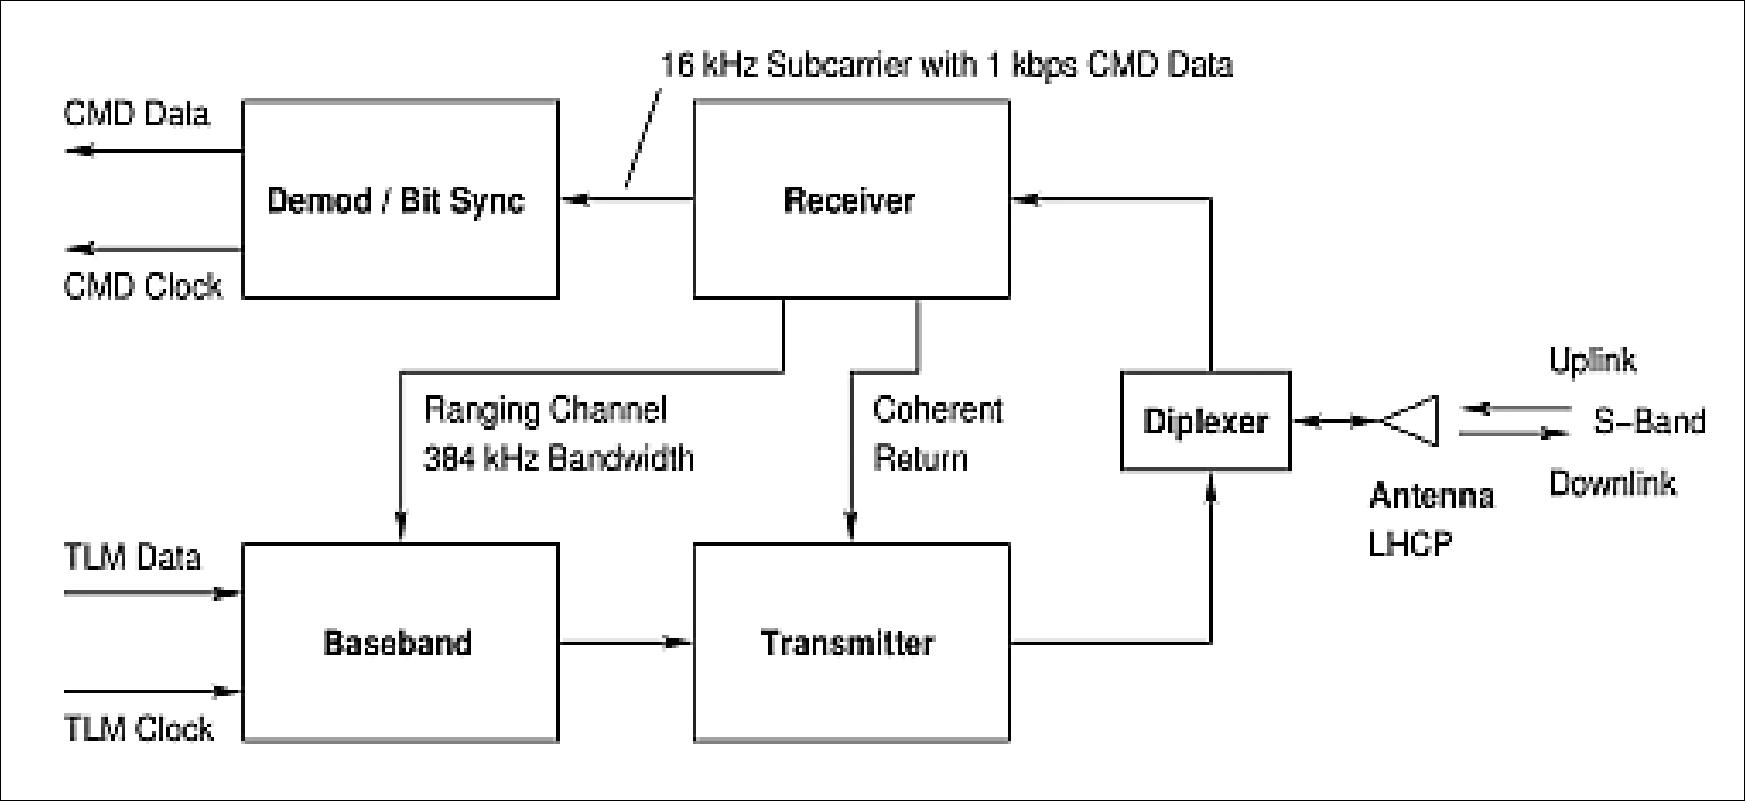 Figure 13: THEMIS S-band phase-locked transponder block diagram (image credit: USB/SSL)